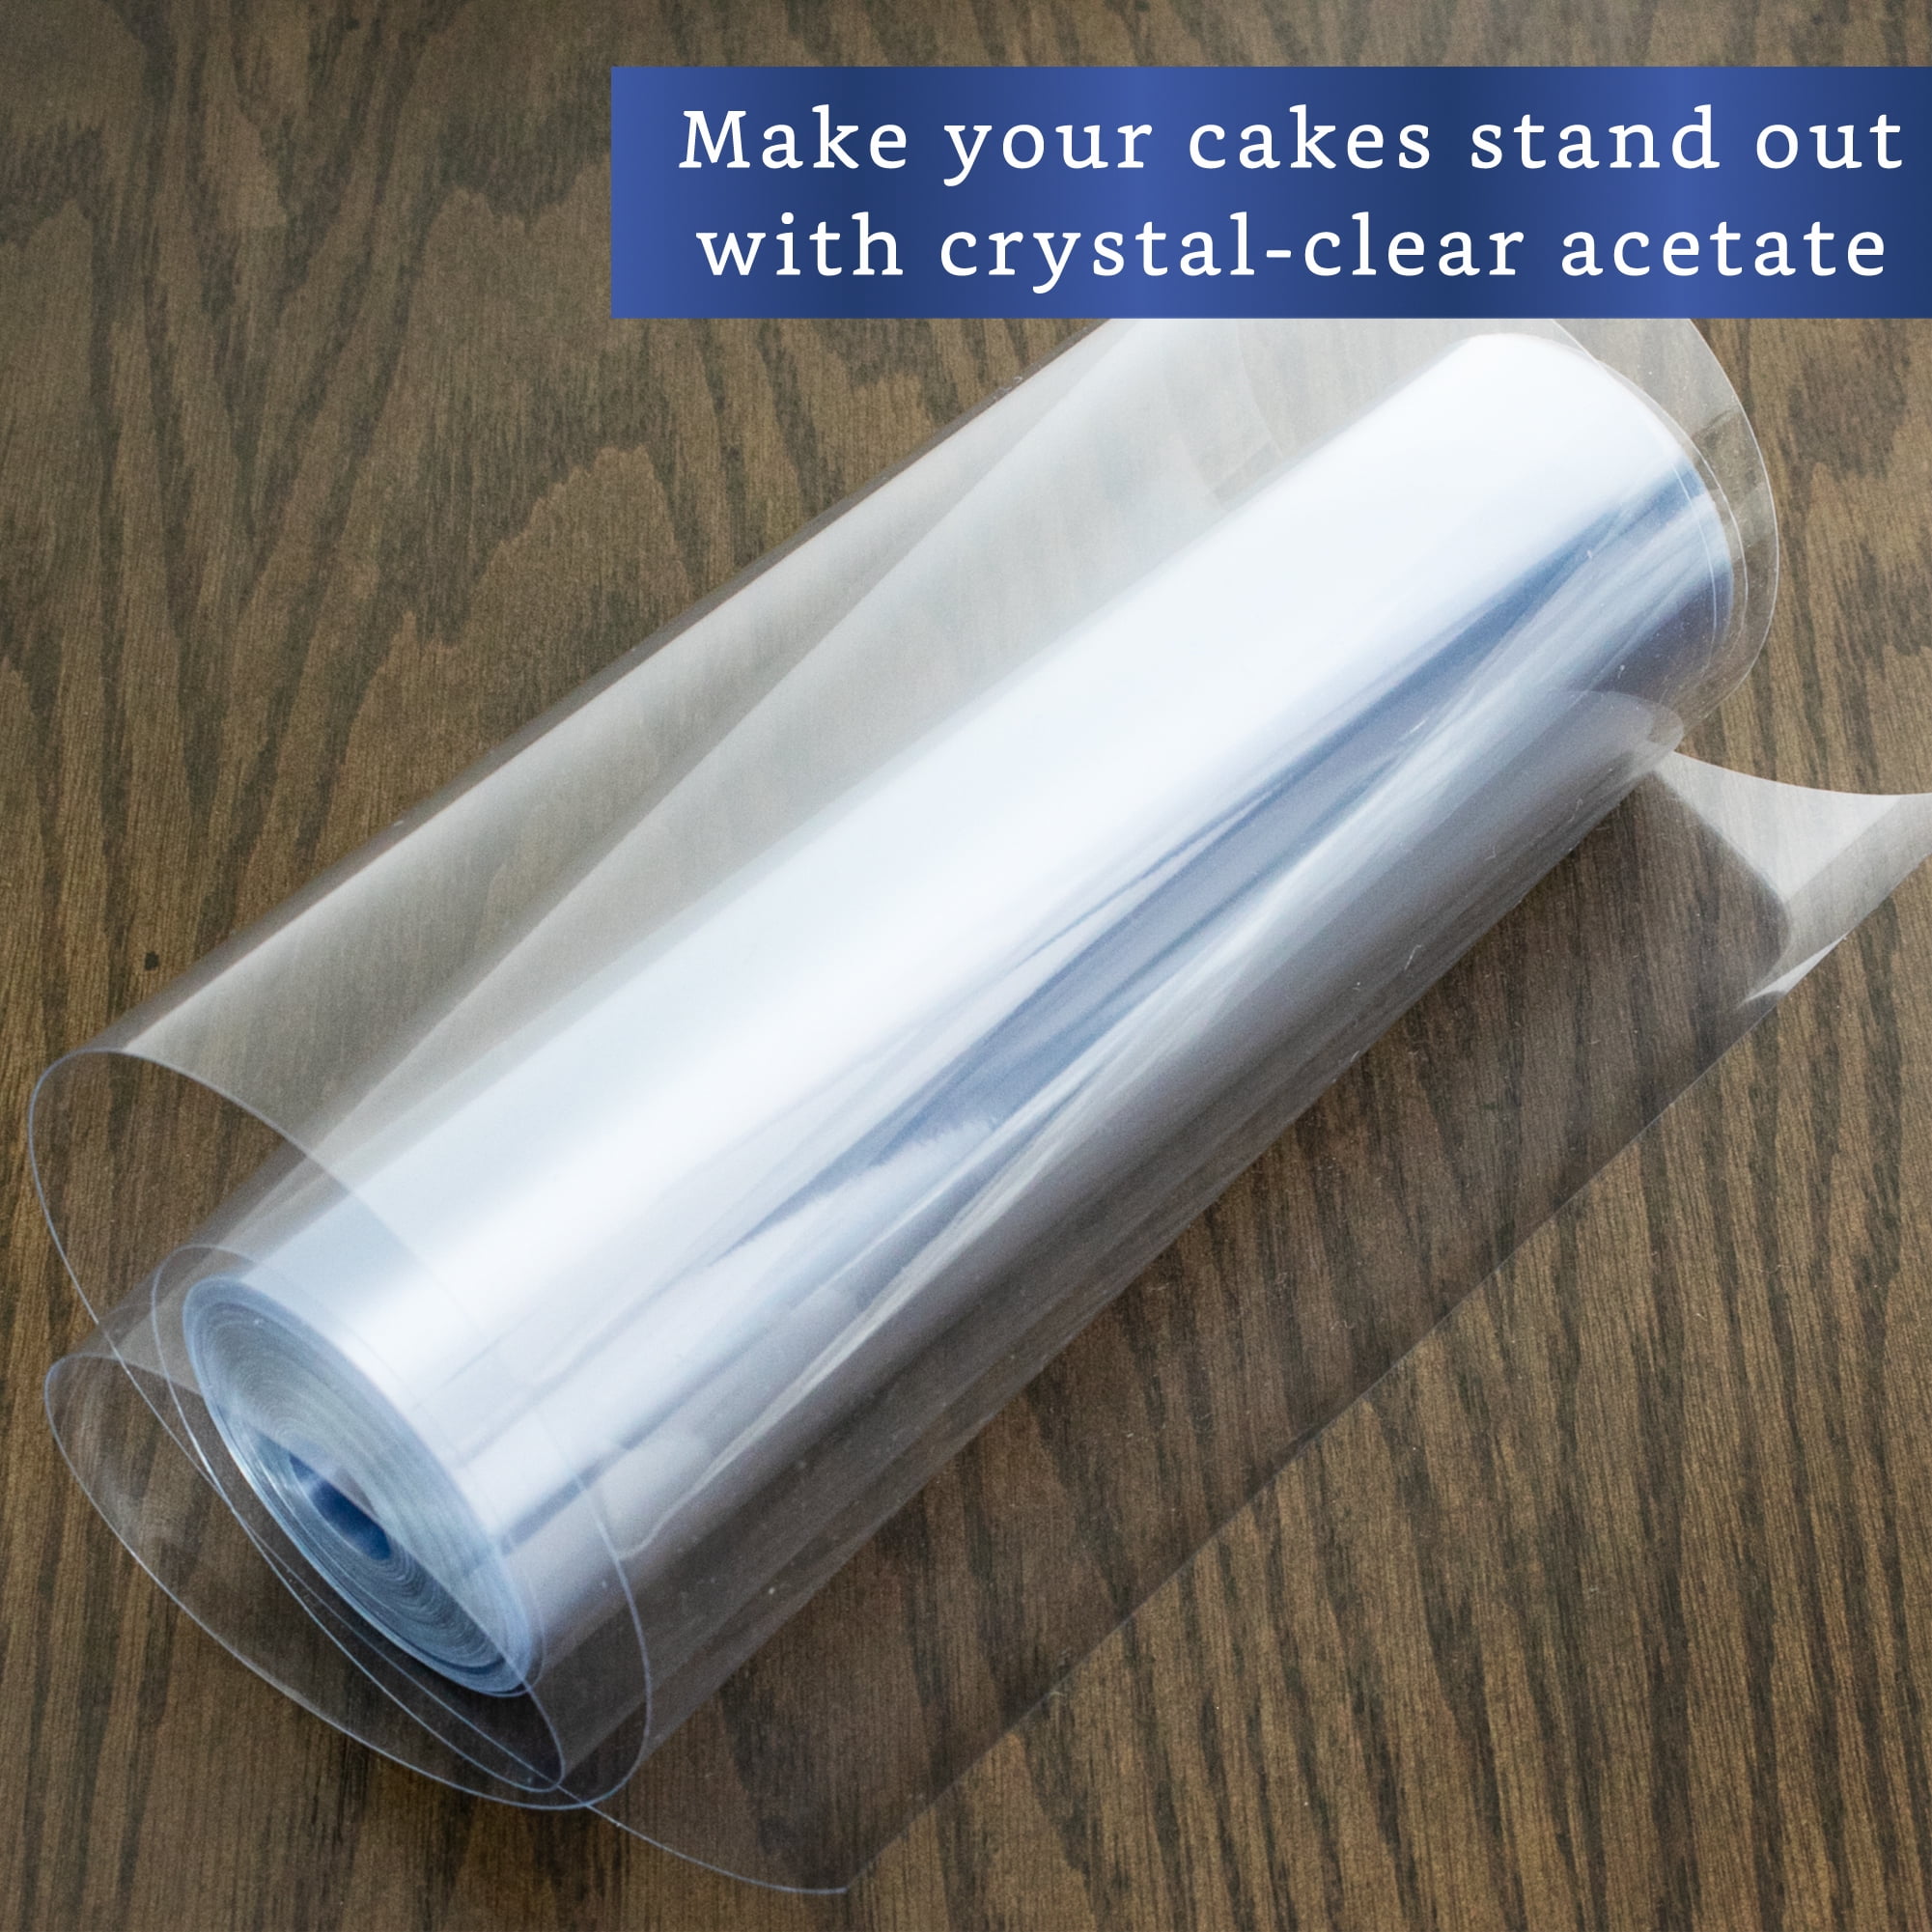 Cake Collar Acetate Roll 2 x 600 in (50ft) - Cake Collar 2 in - Acetate  Cake Collars - Acetate Sheets for Baking - Cake Ring Sleeves - Cake  Wrapping